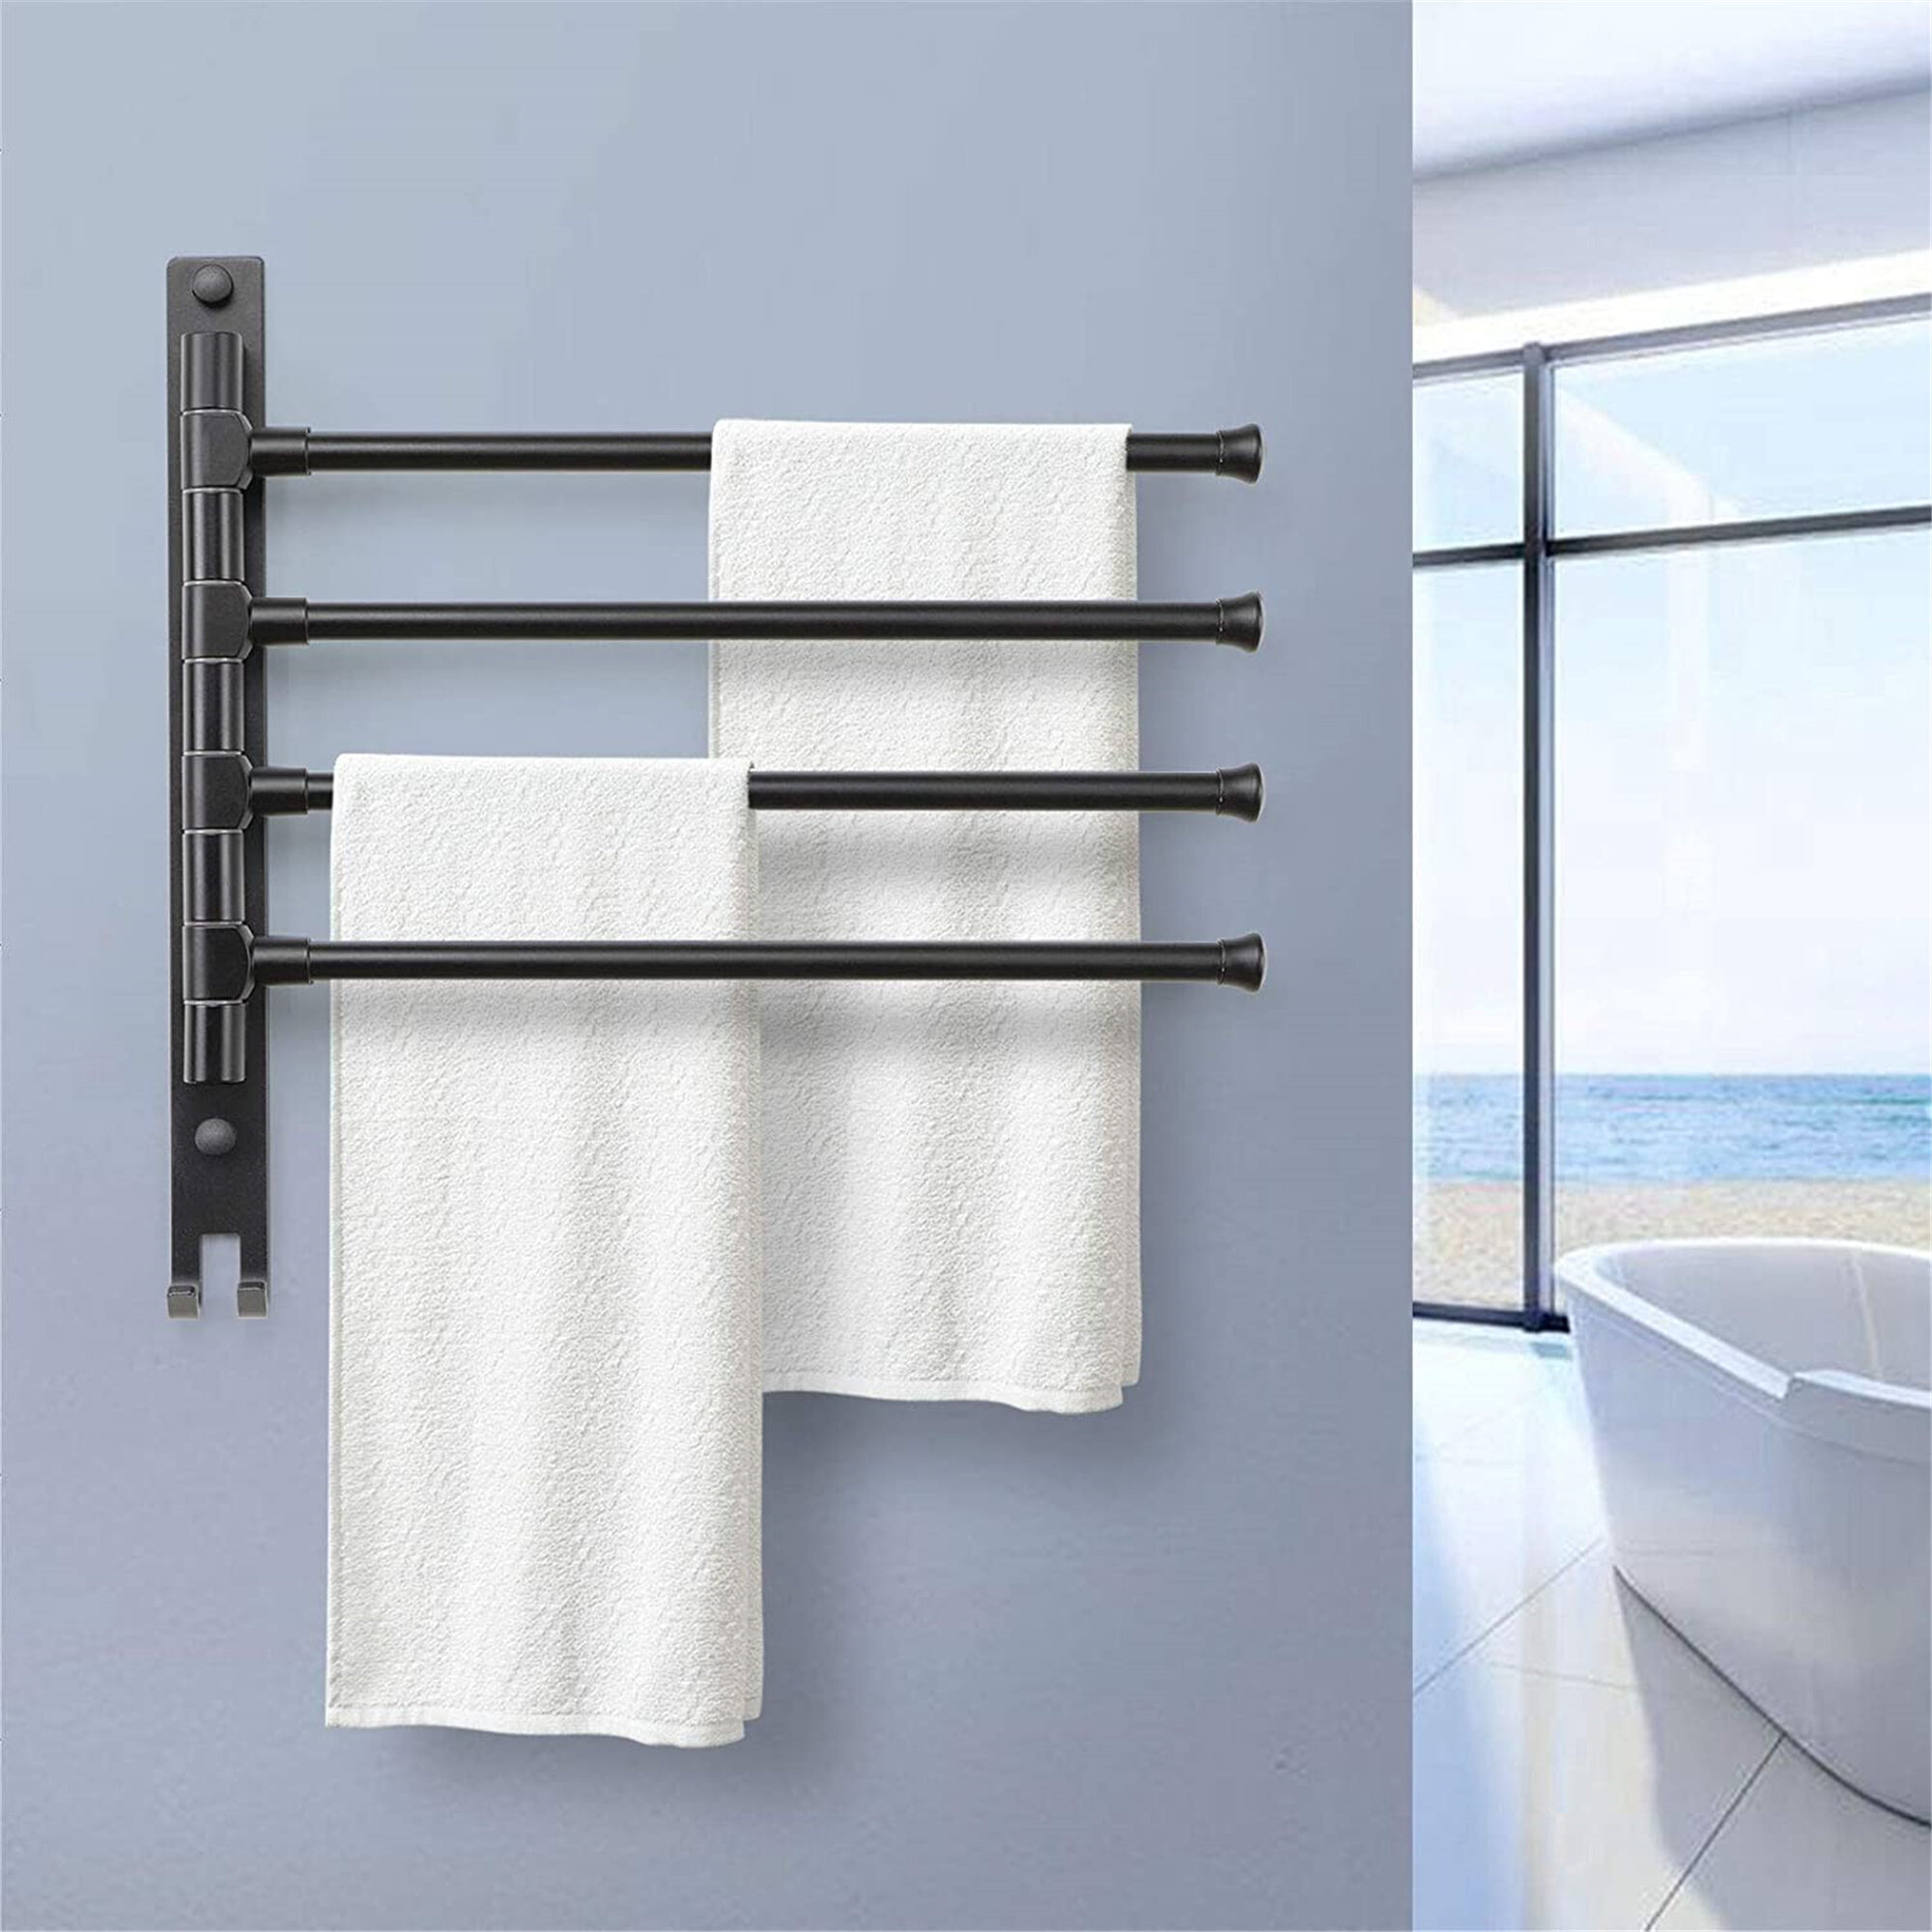 Aluminum black Swivel Towel Holder 3-Arm Swing Bar Wall Mount Rack Towel Hanger